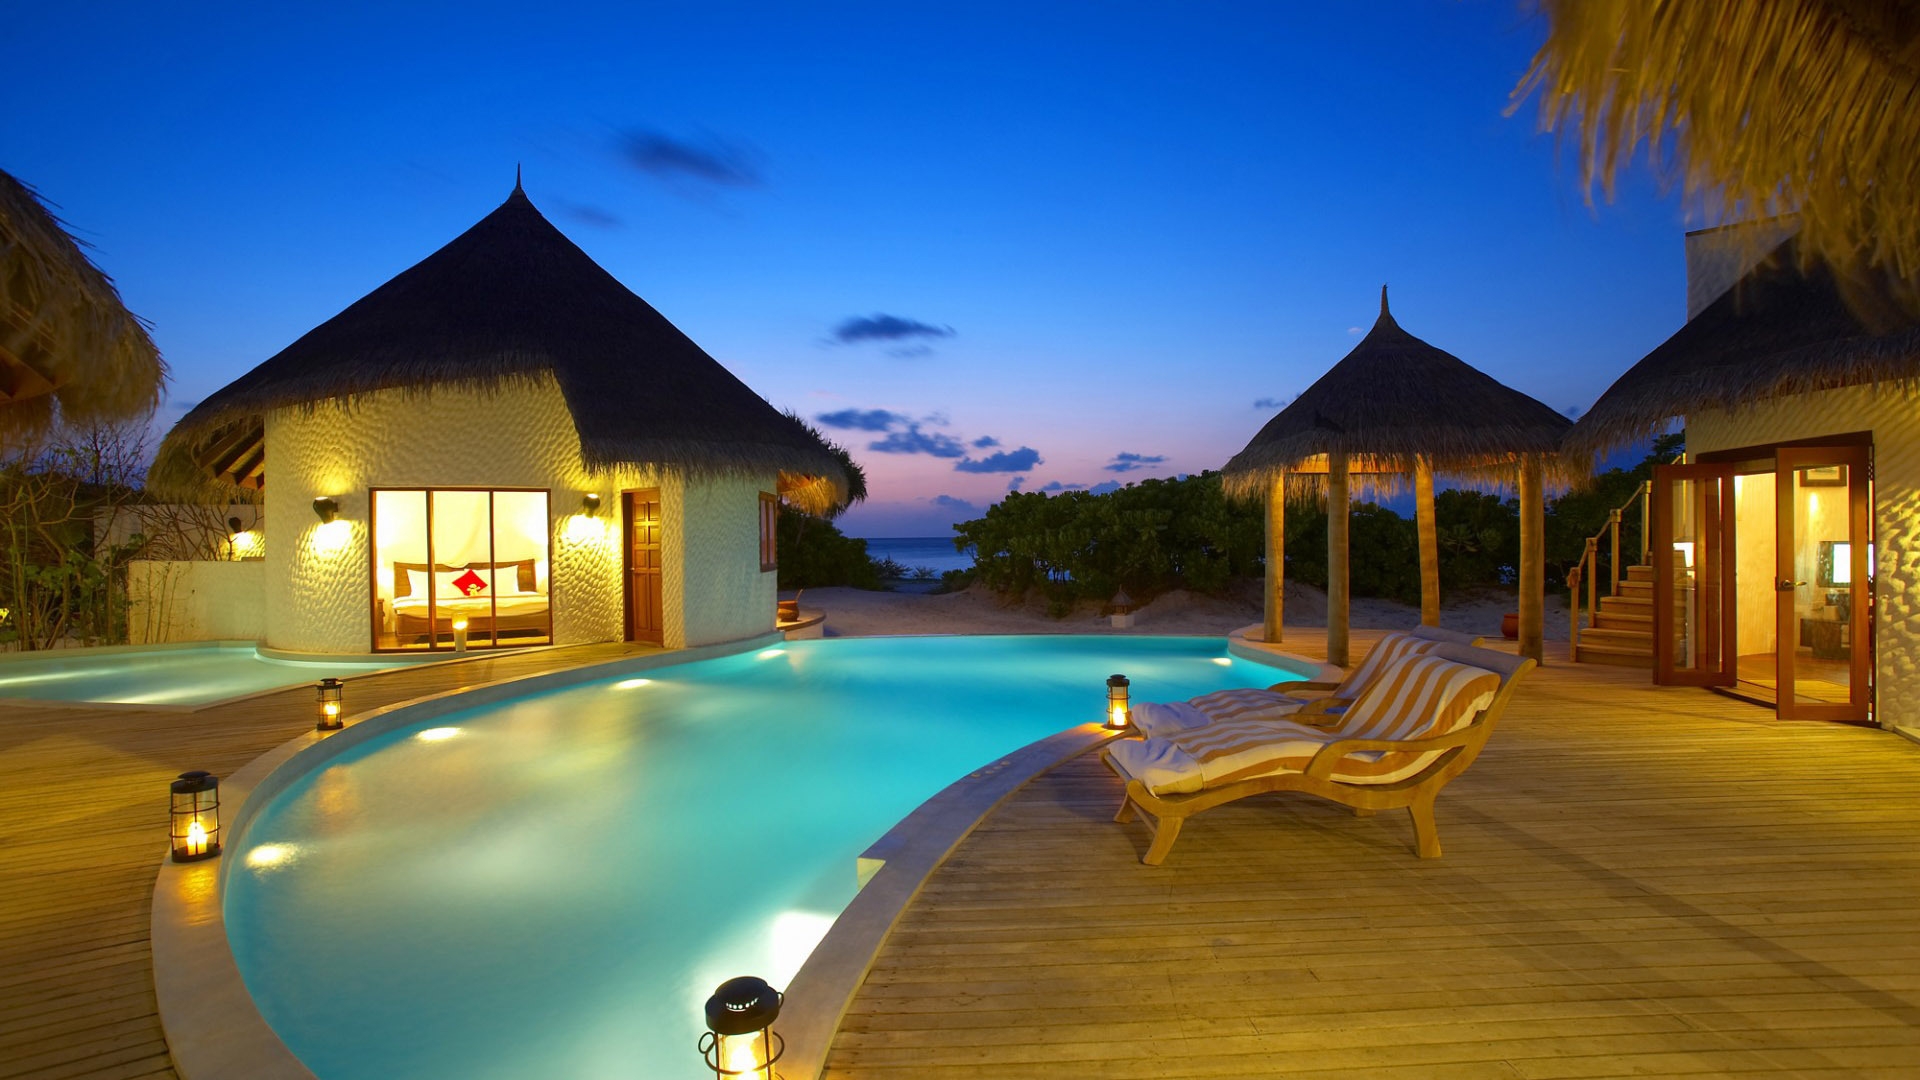 Maldives 5 Star Resort for 1920 x 1080 HDTV 1080p resolution